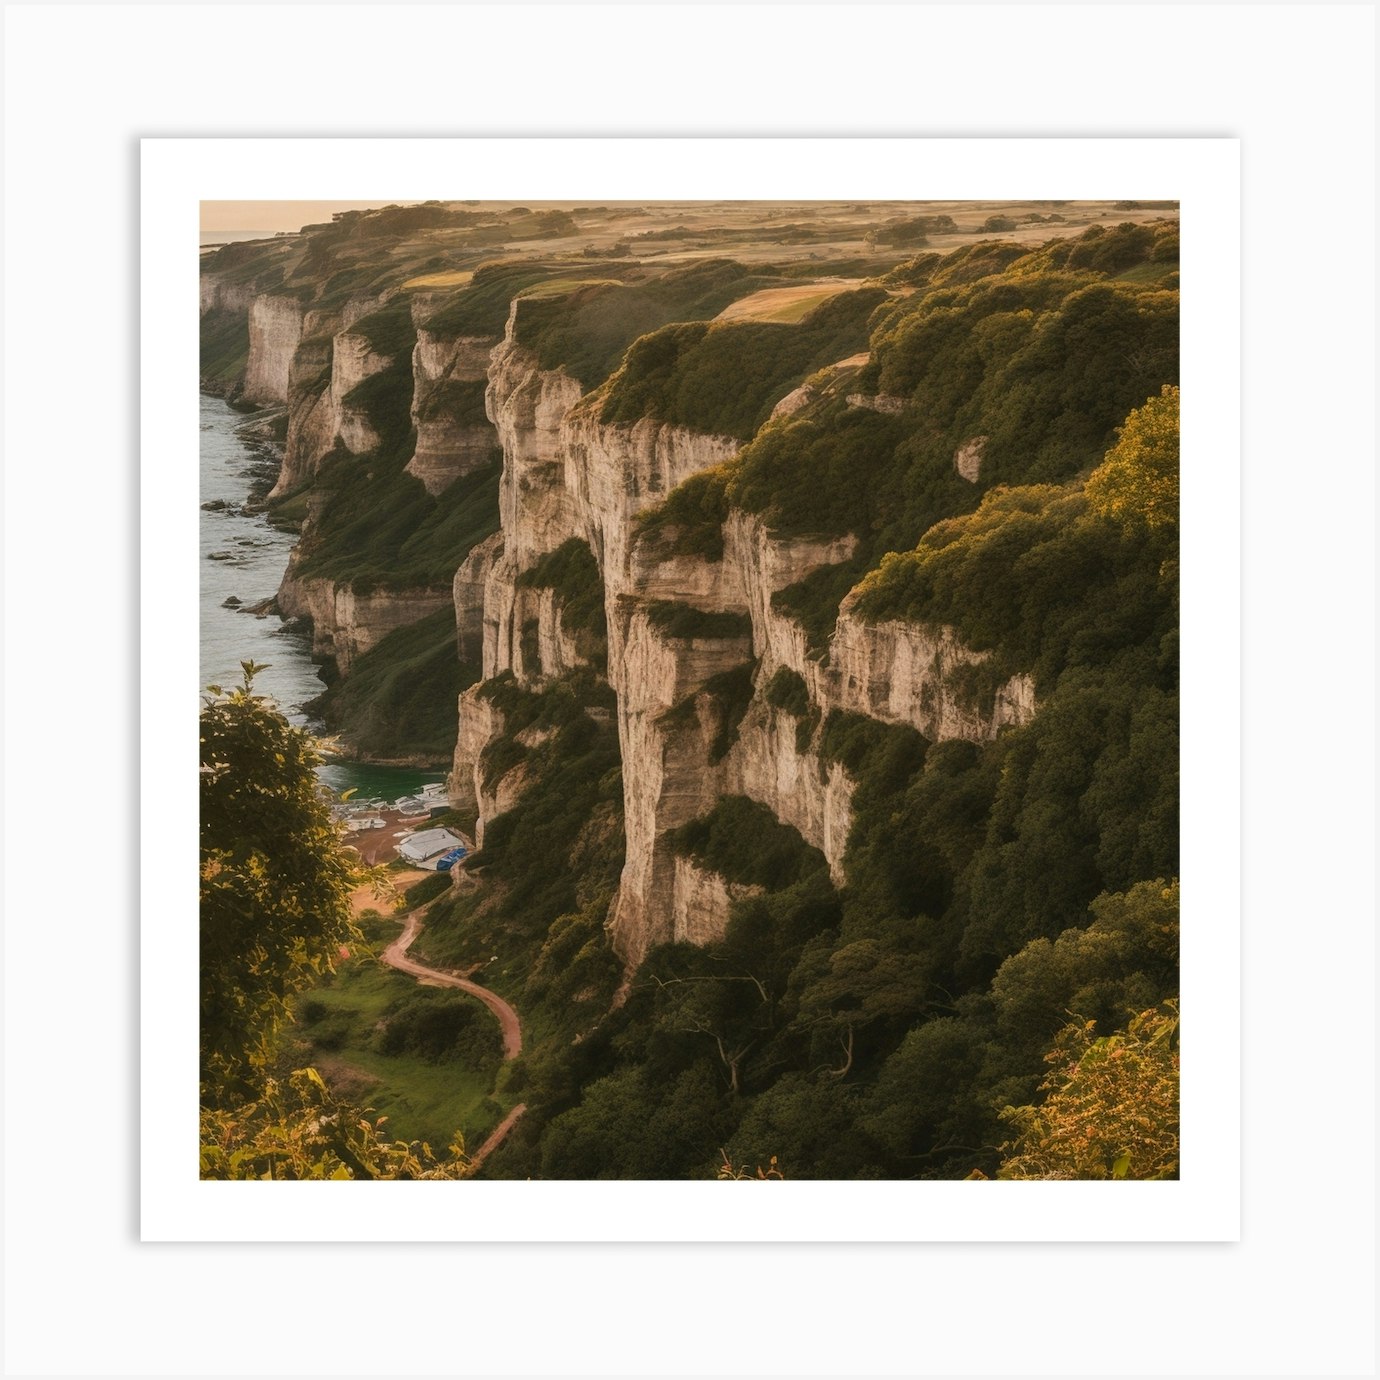 Cliffs Of Calais Art Print by Phsa3456 - Fy